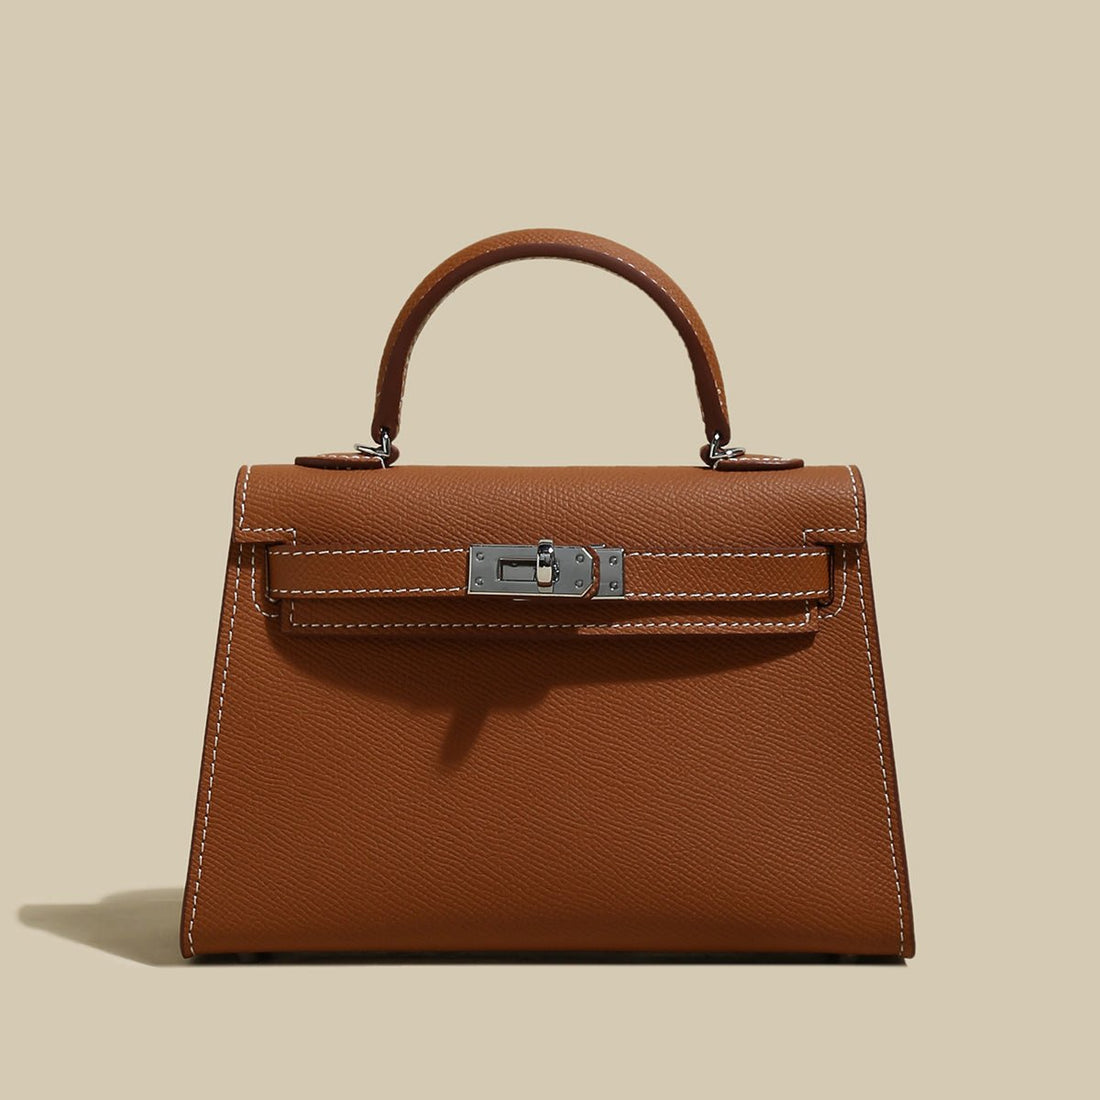 City Elite Brown Leather Top Handle Bag - 0cm